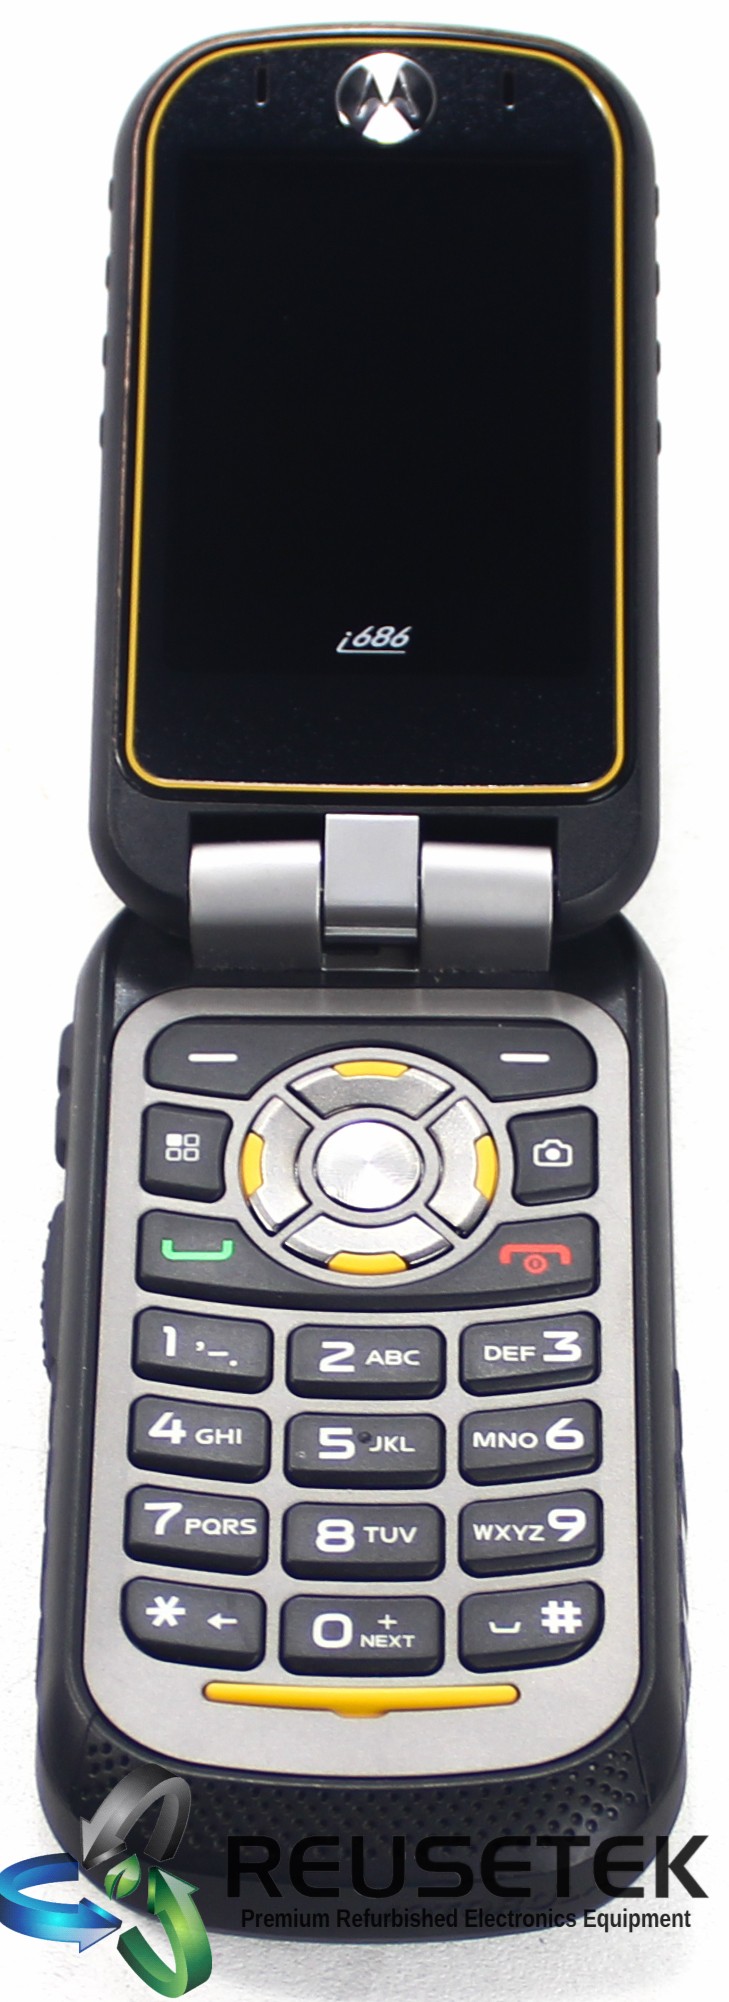 500030149-Motorola Brute i680 Sprint Black Cell Phone -image